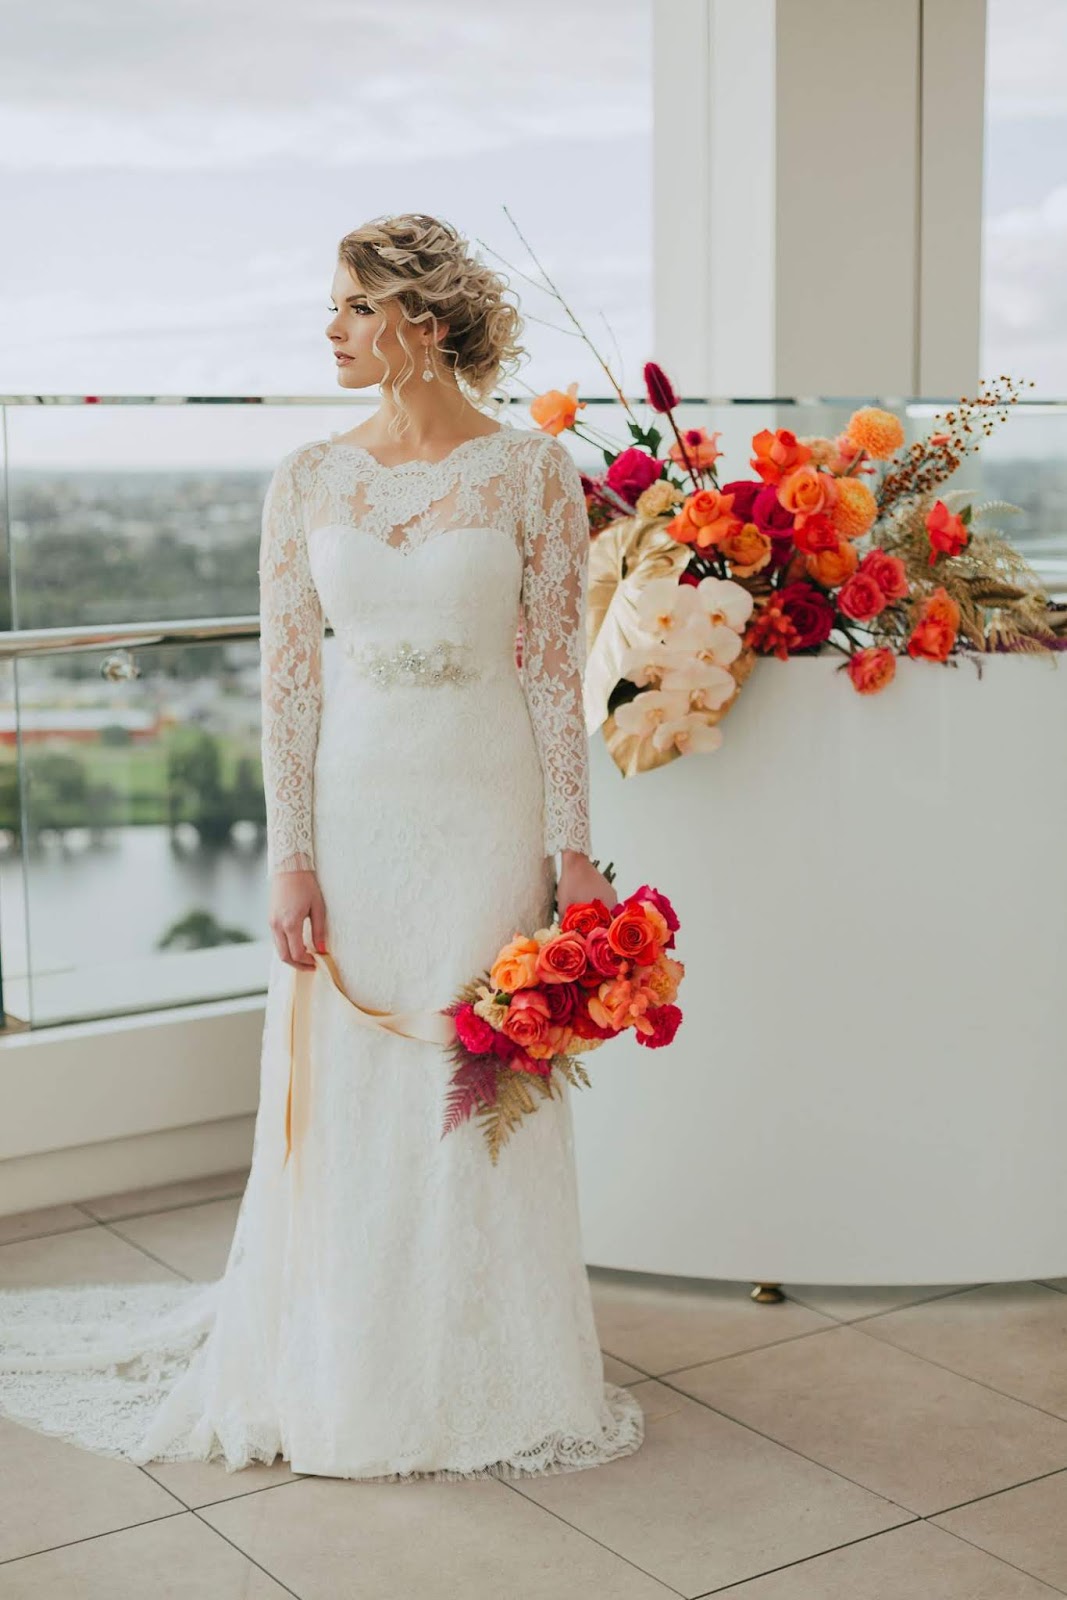 simone addison photography weddings love is love bride + bride wedding gowns floral design cake venue